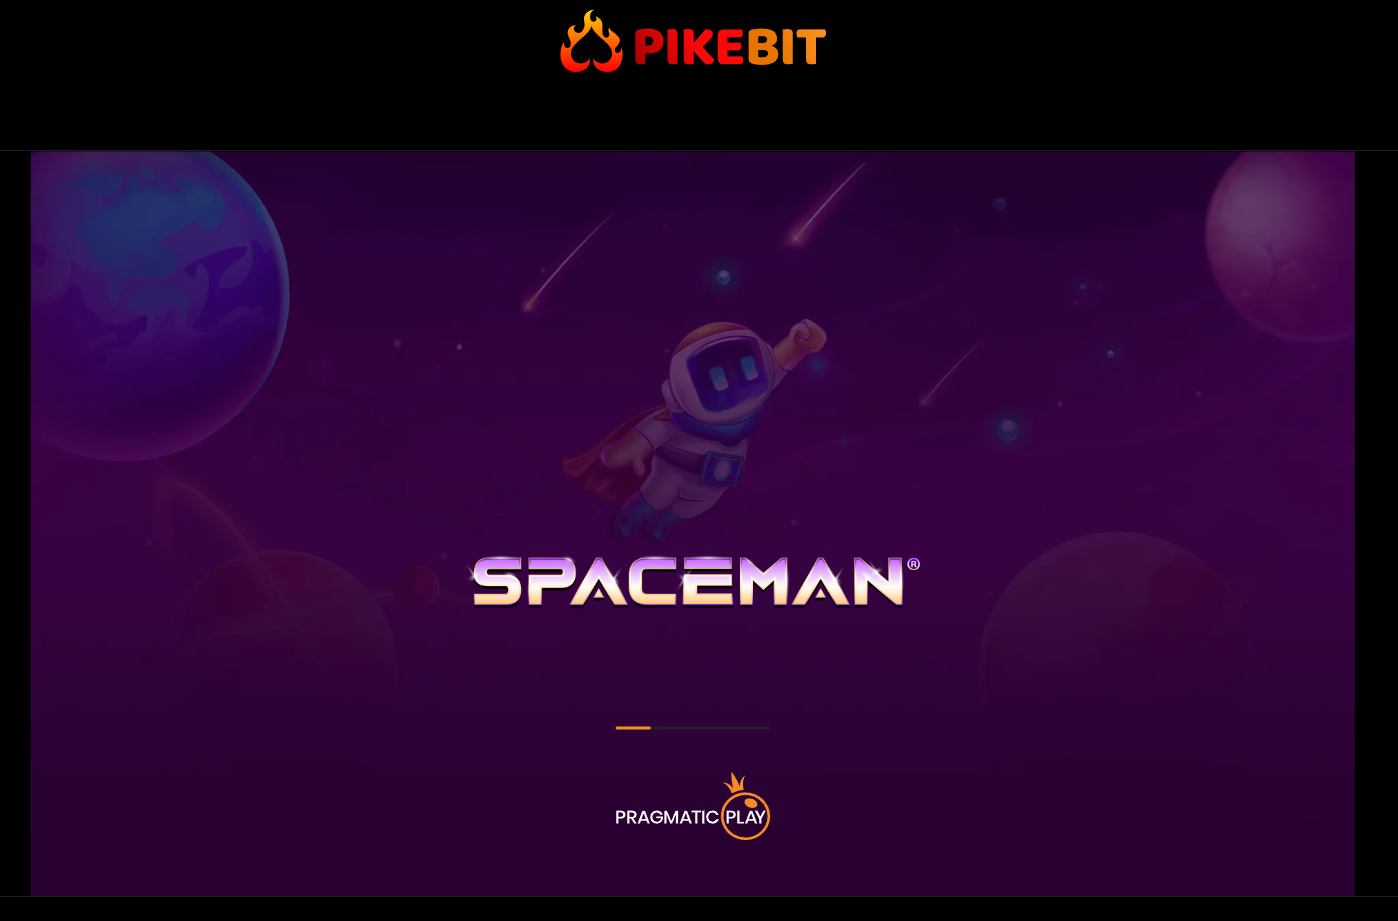 Casino Pikebit Spaceman